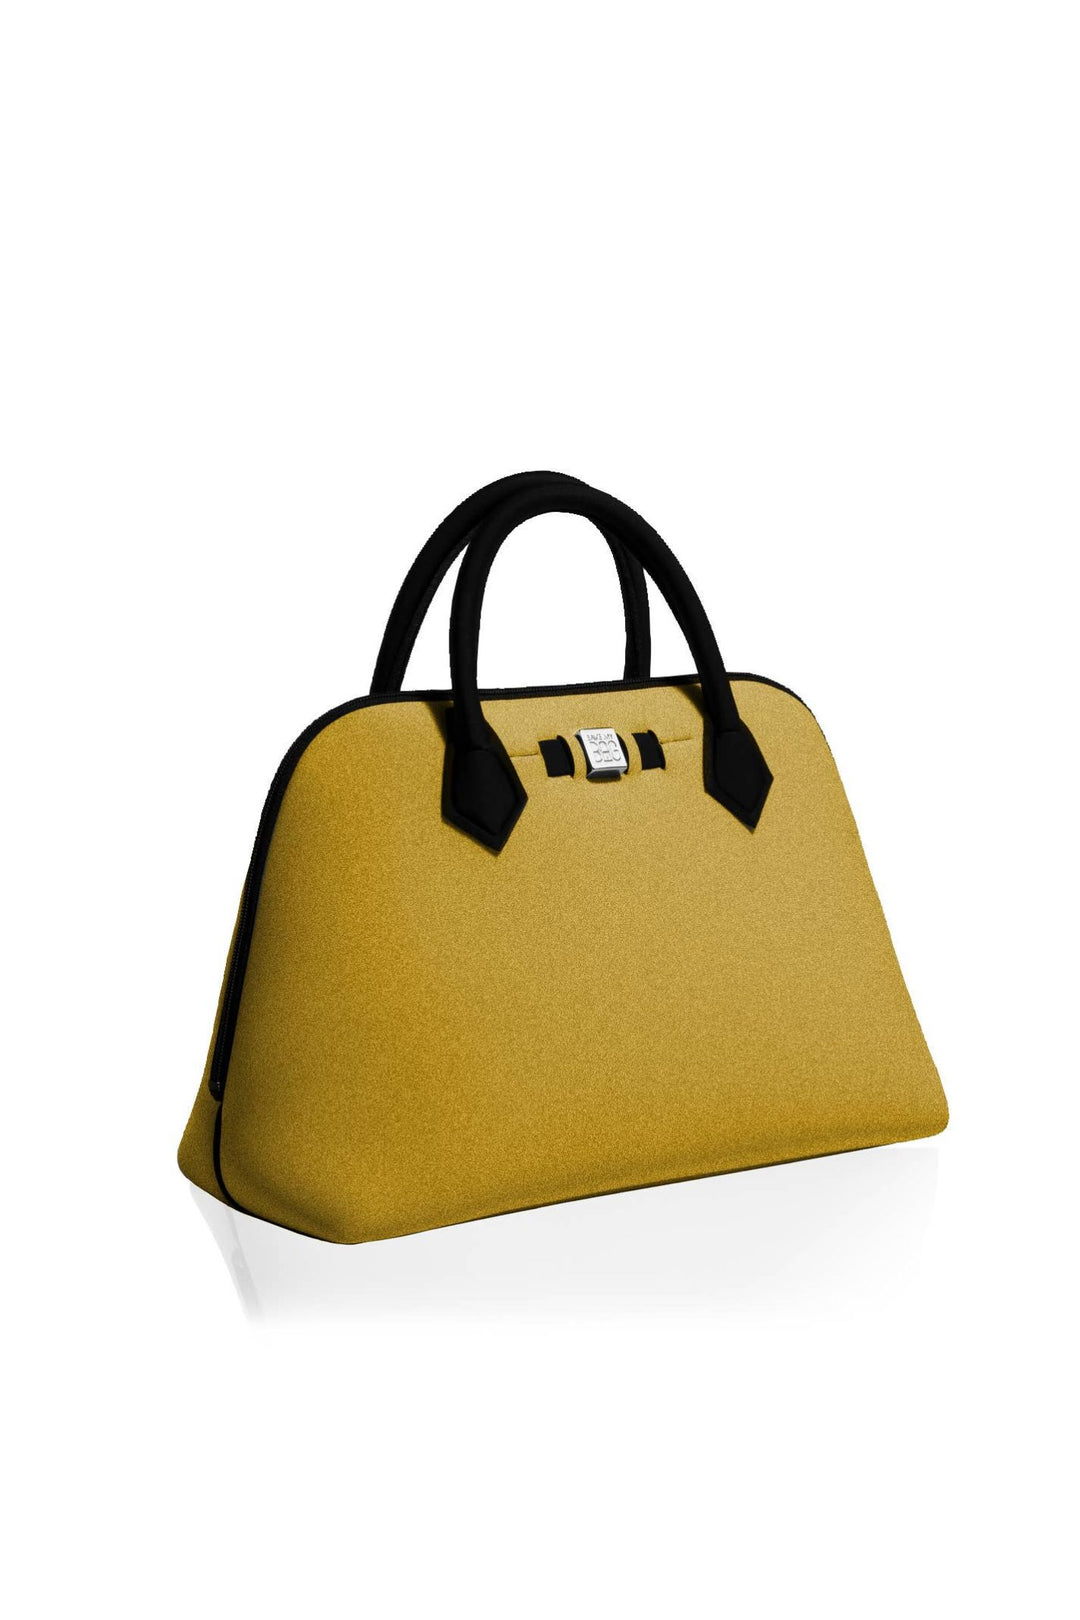 Save My Bag Metallic Gold Washable Eco Neoprene Handbag